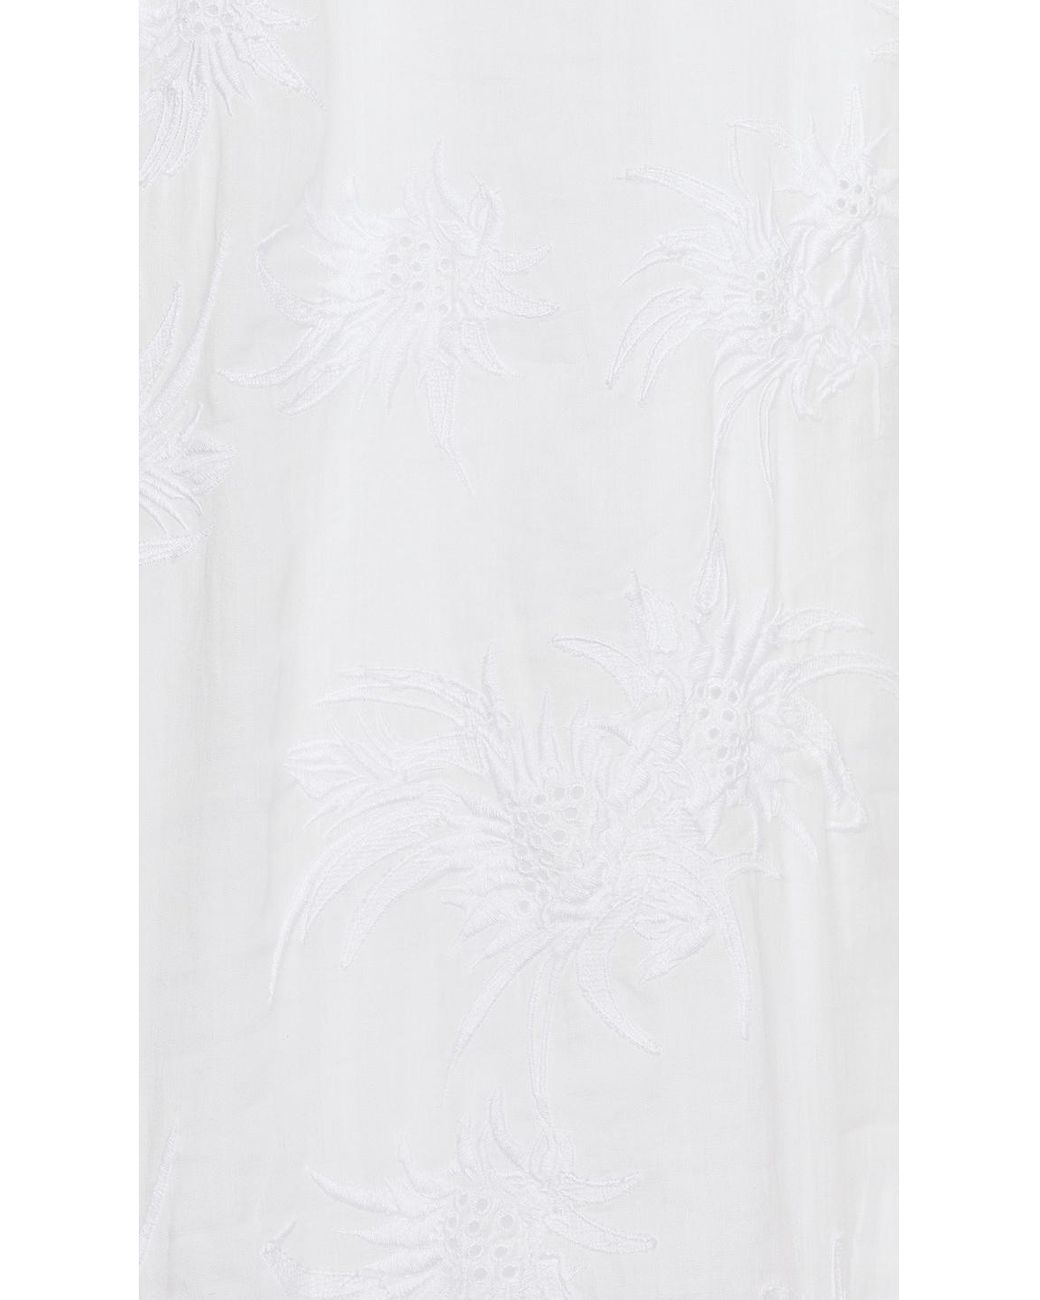 Rag & Bone Larissa Embroidered Slip Dress in White | Lyst UK